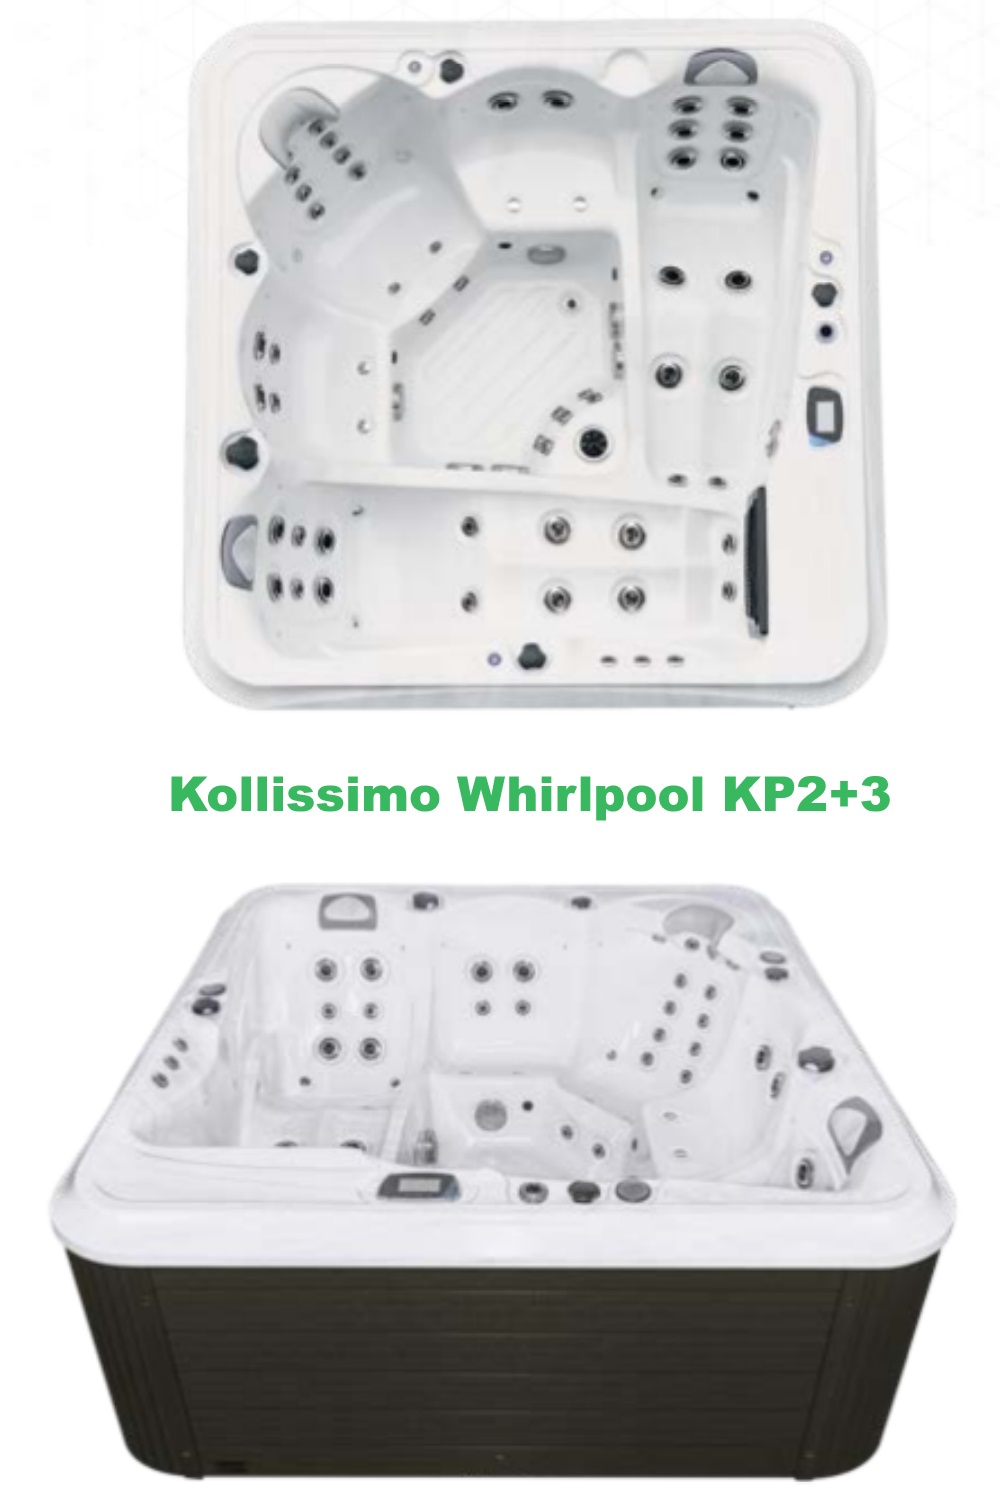 Kollissimo Whirlpool KP2+3